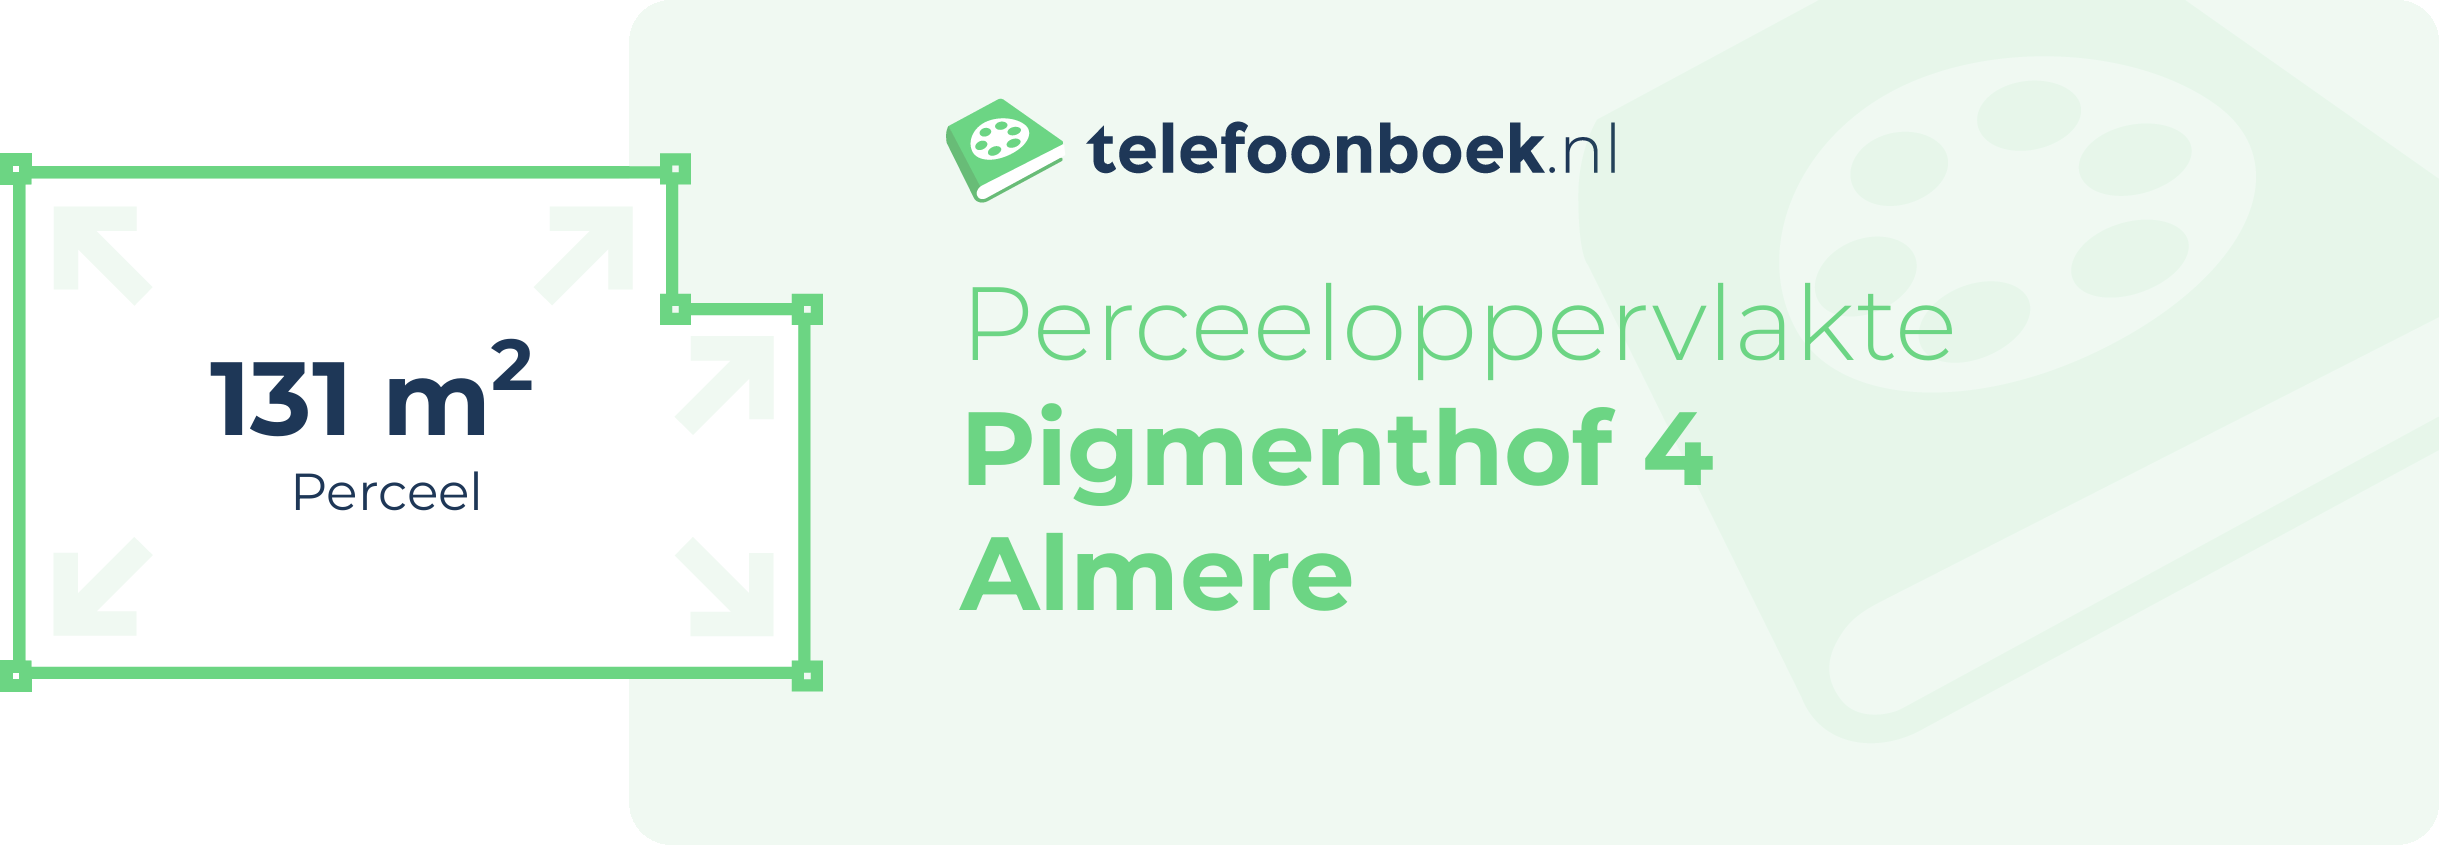 Perceeloppervlakte Pigmenthof 4 Almere